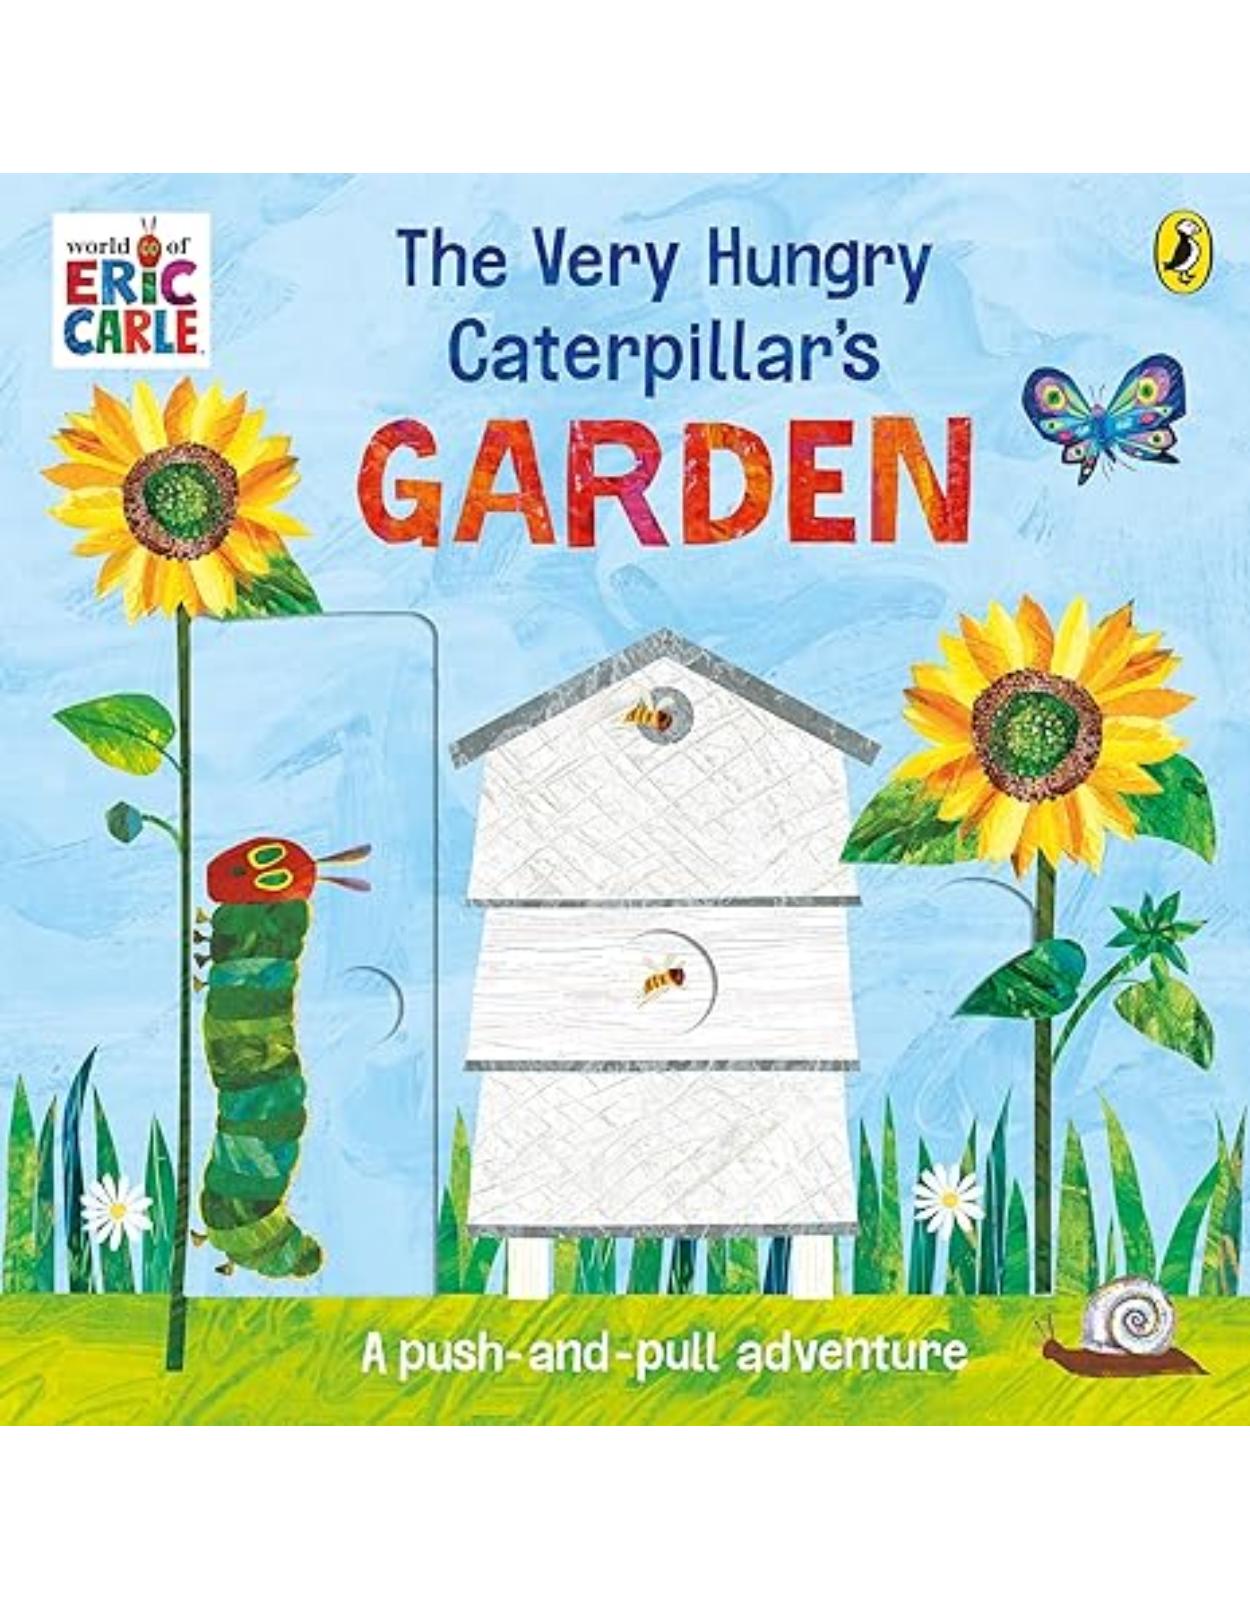 The Very Hungry Caterpillar’s Garden